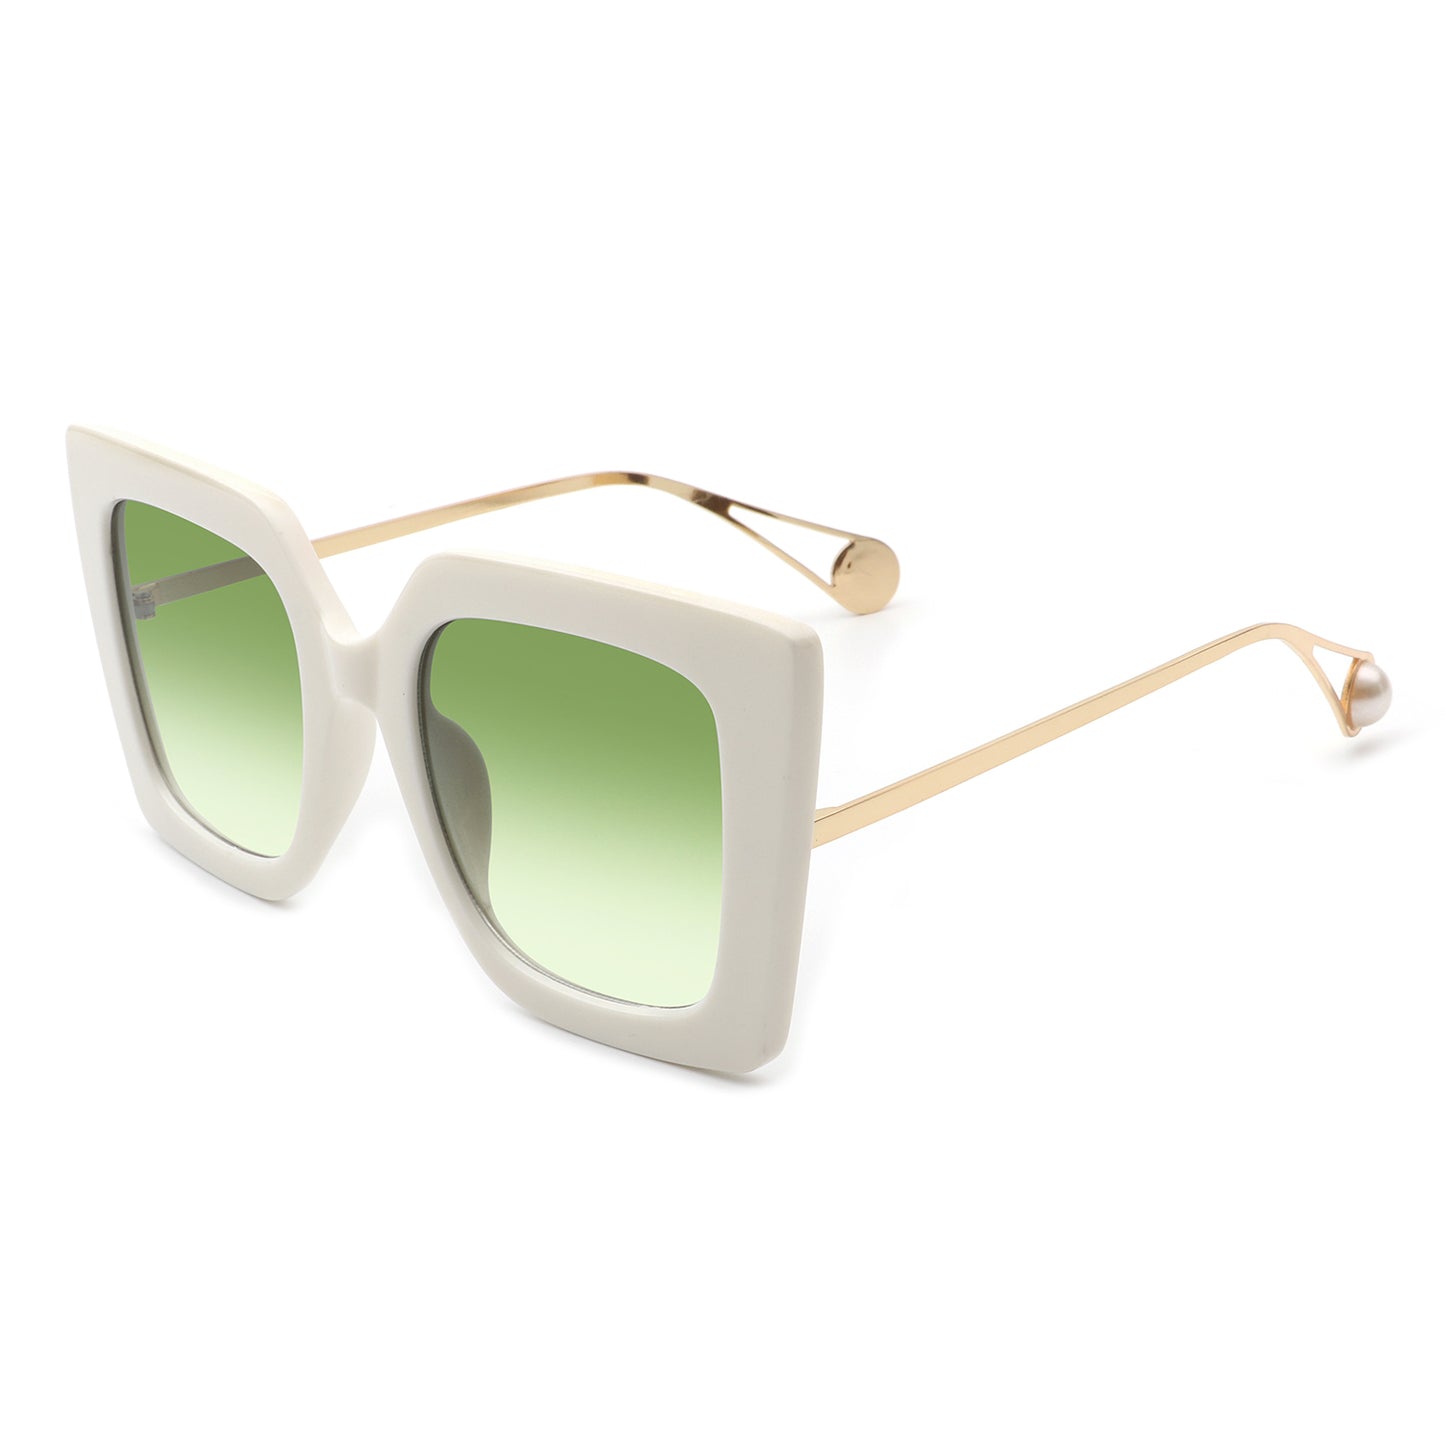 White oversized cat eye sunglasses